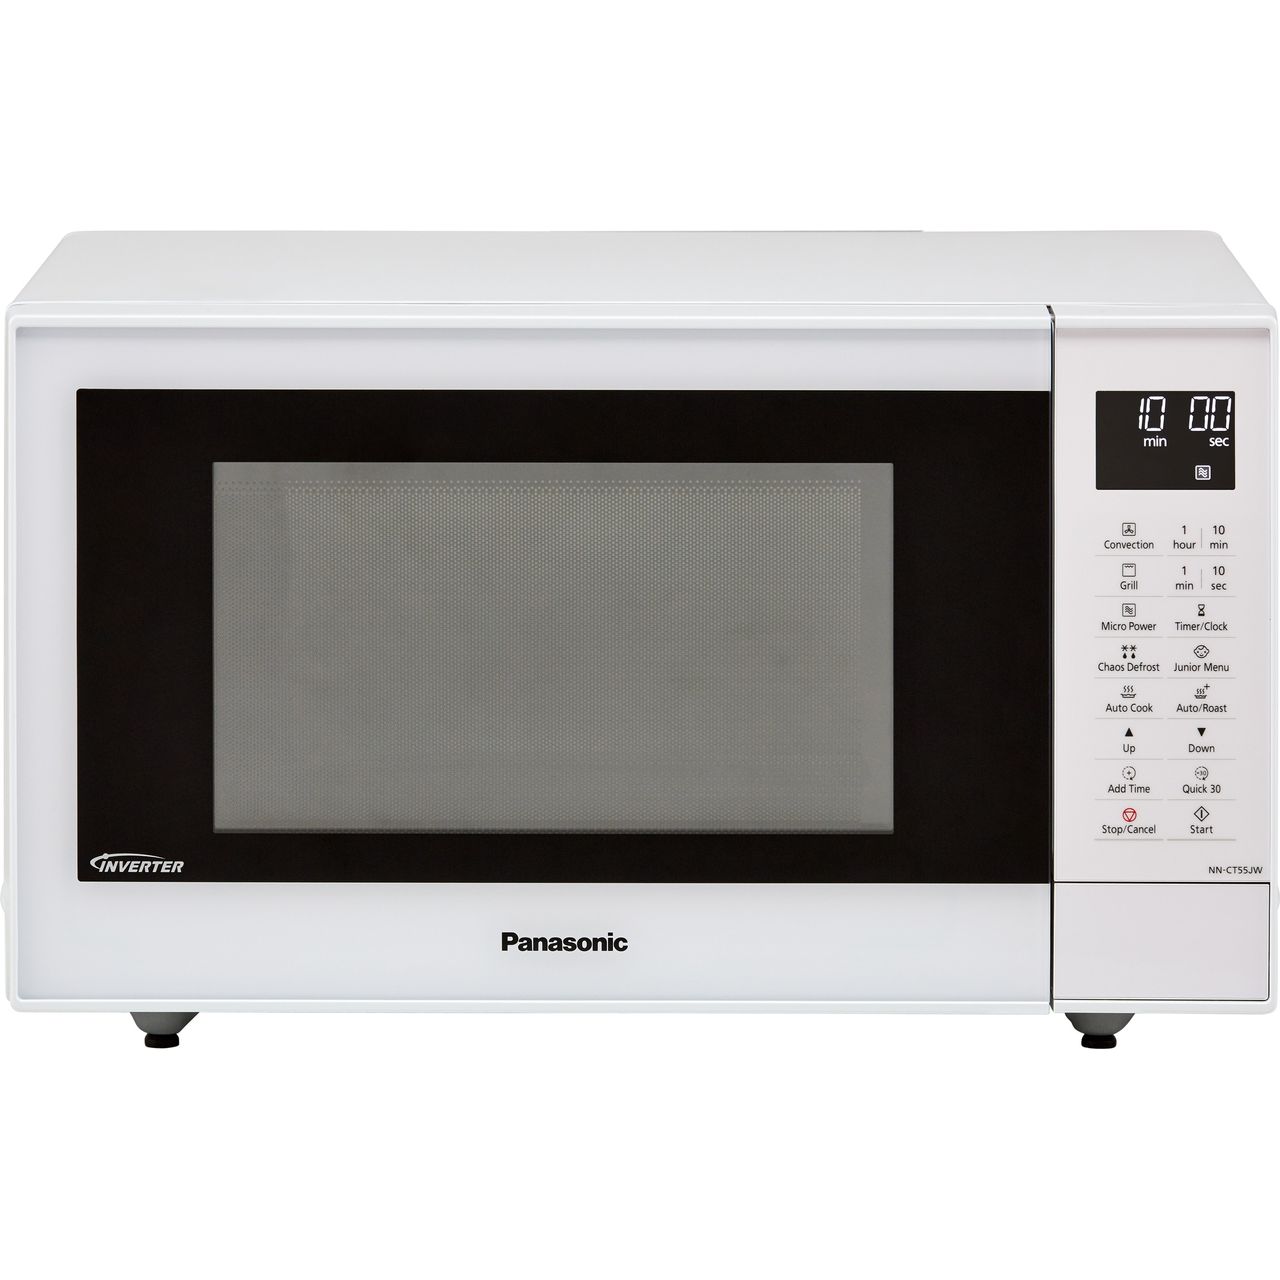 How Do You Program A Panasonic Microwave - Panasonic Vintage Microwave